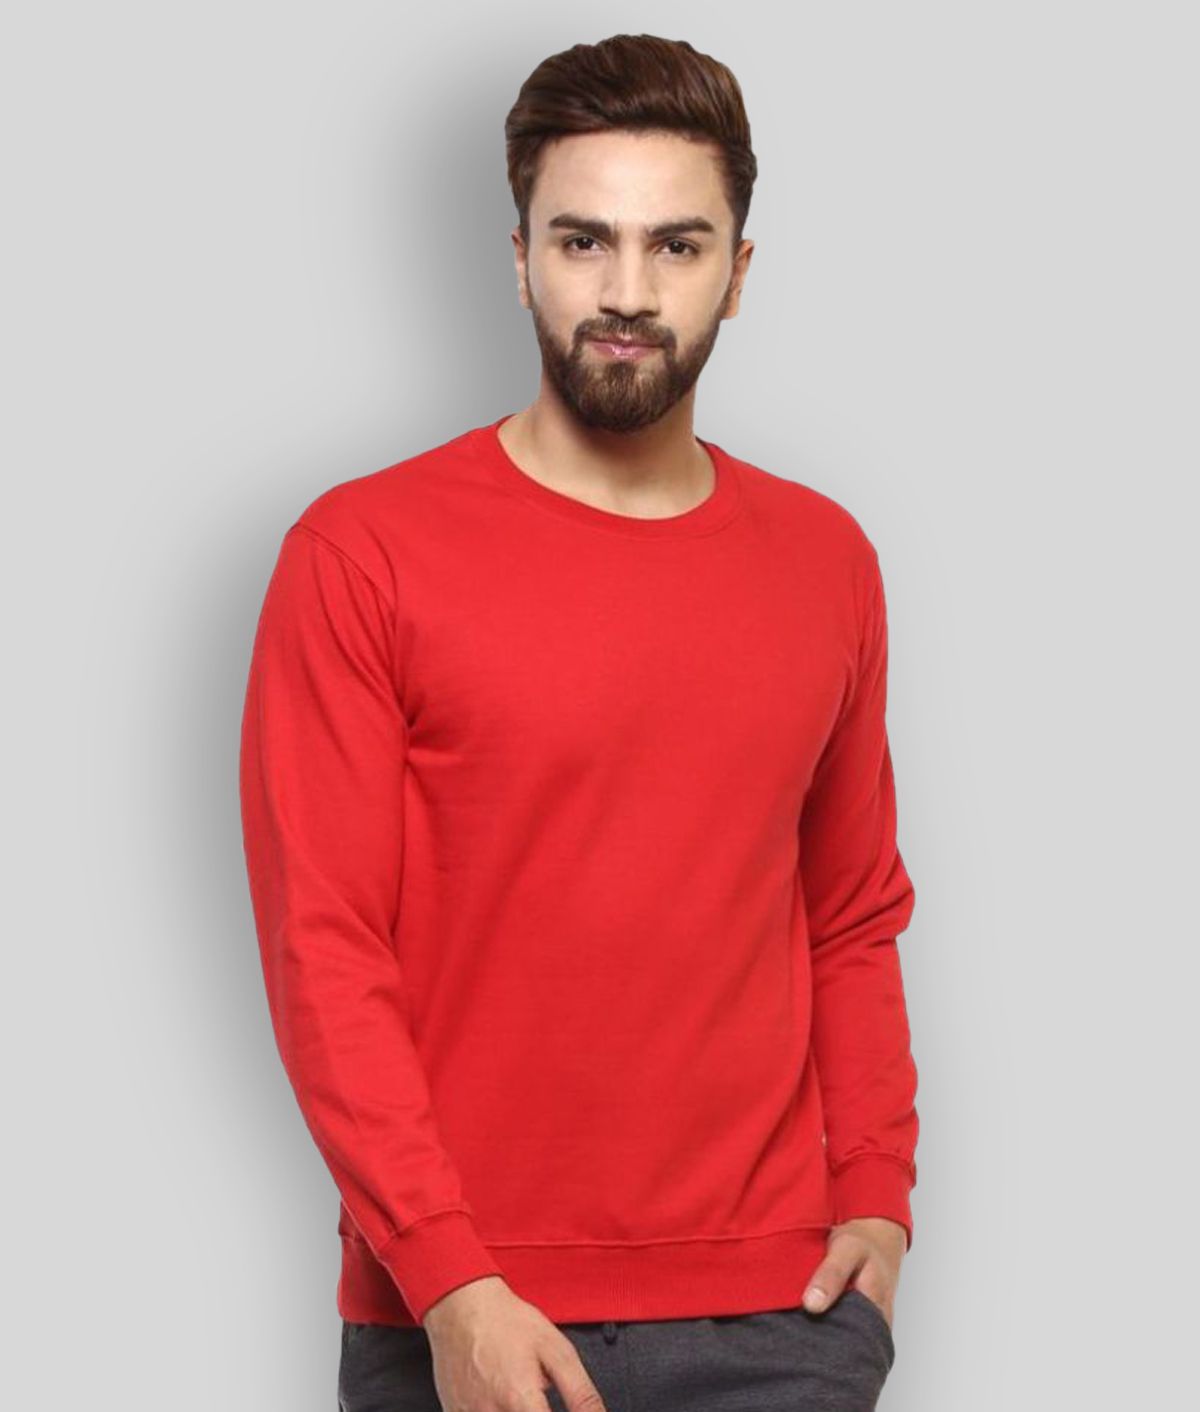     			Leotude Red Sweatshirt